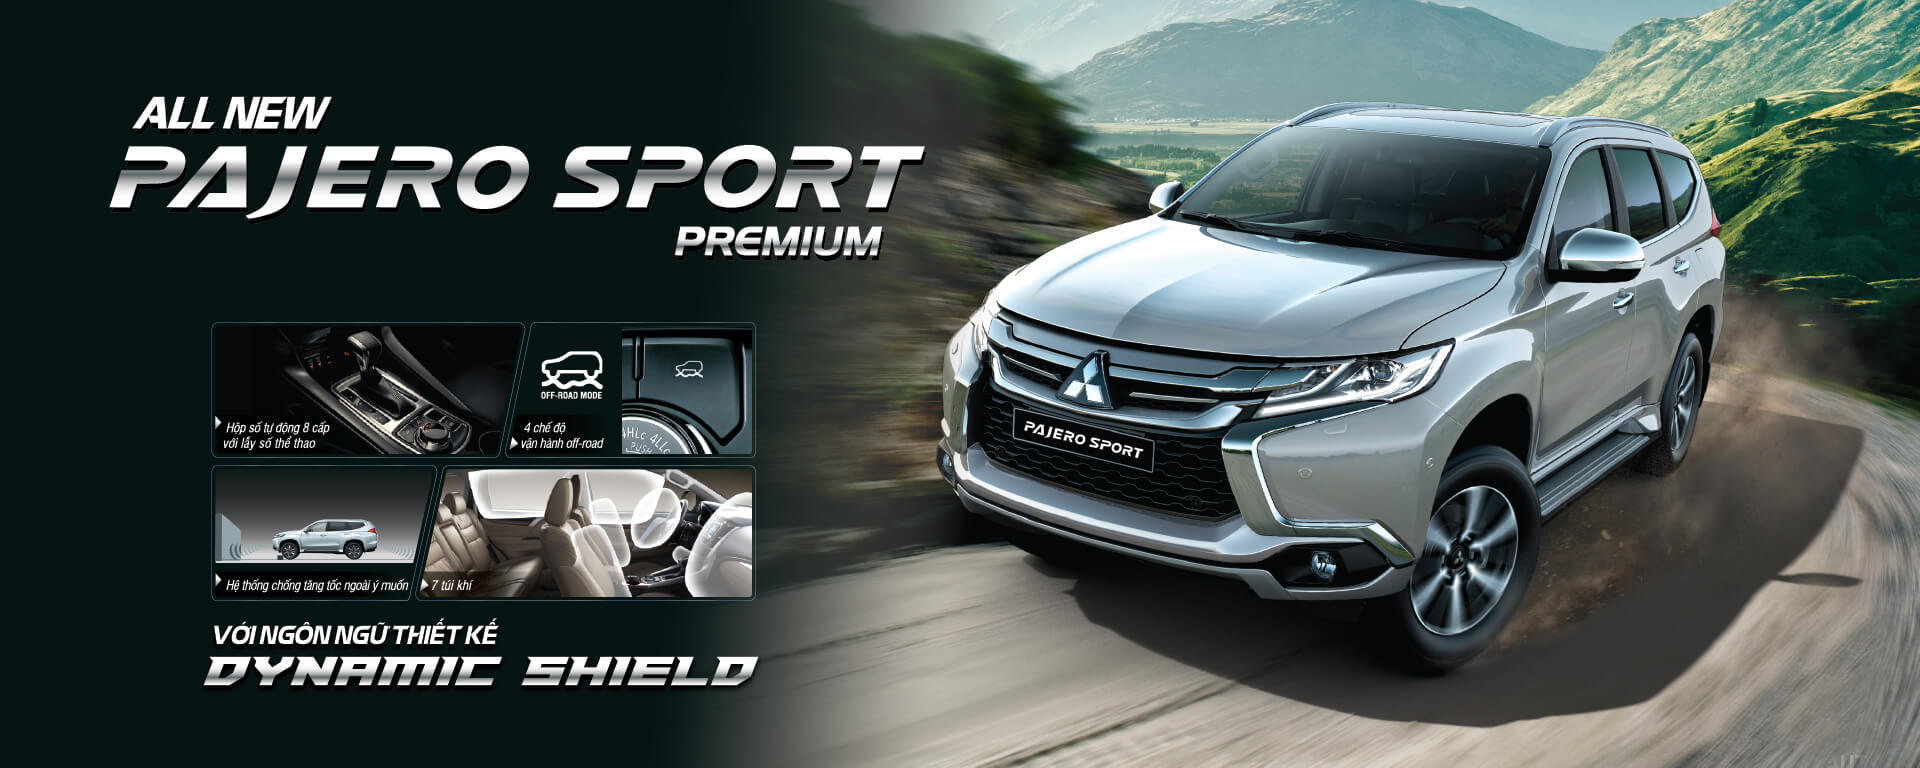 Mitsubishi Pajero Sport Premium